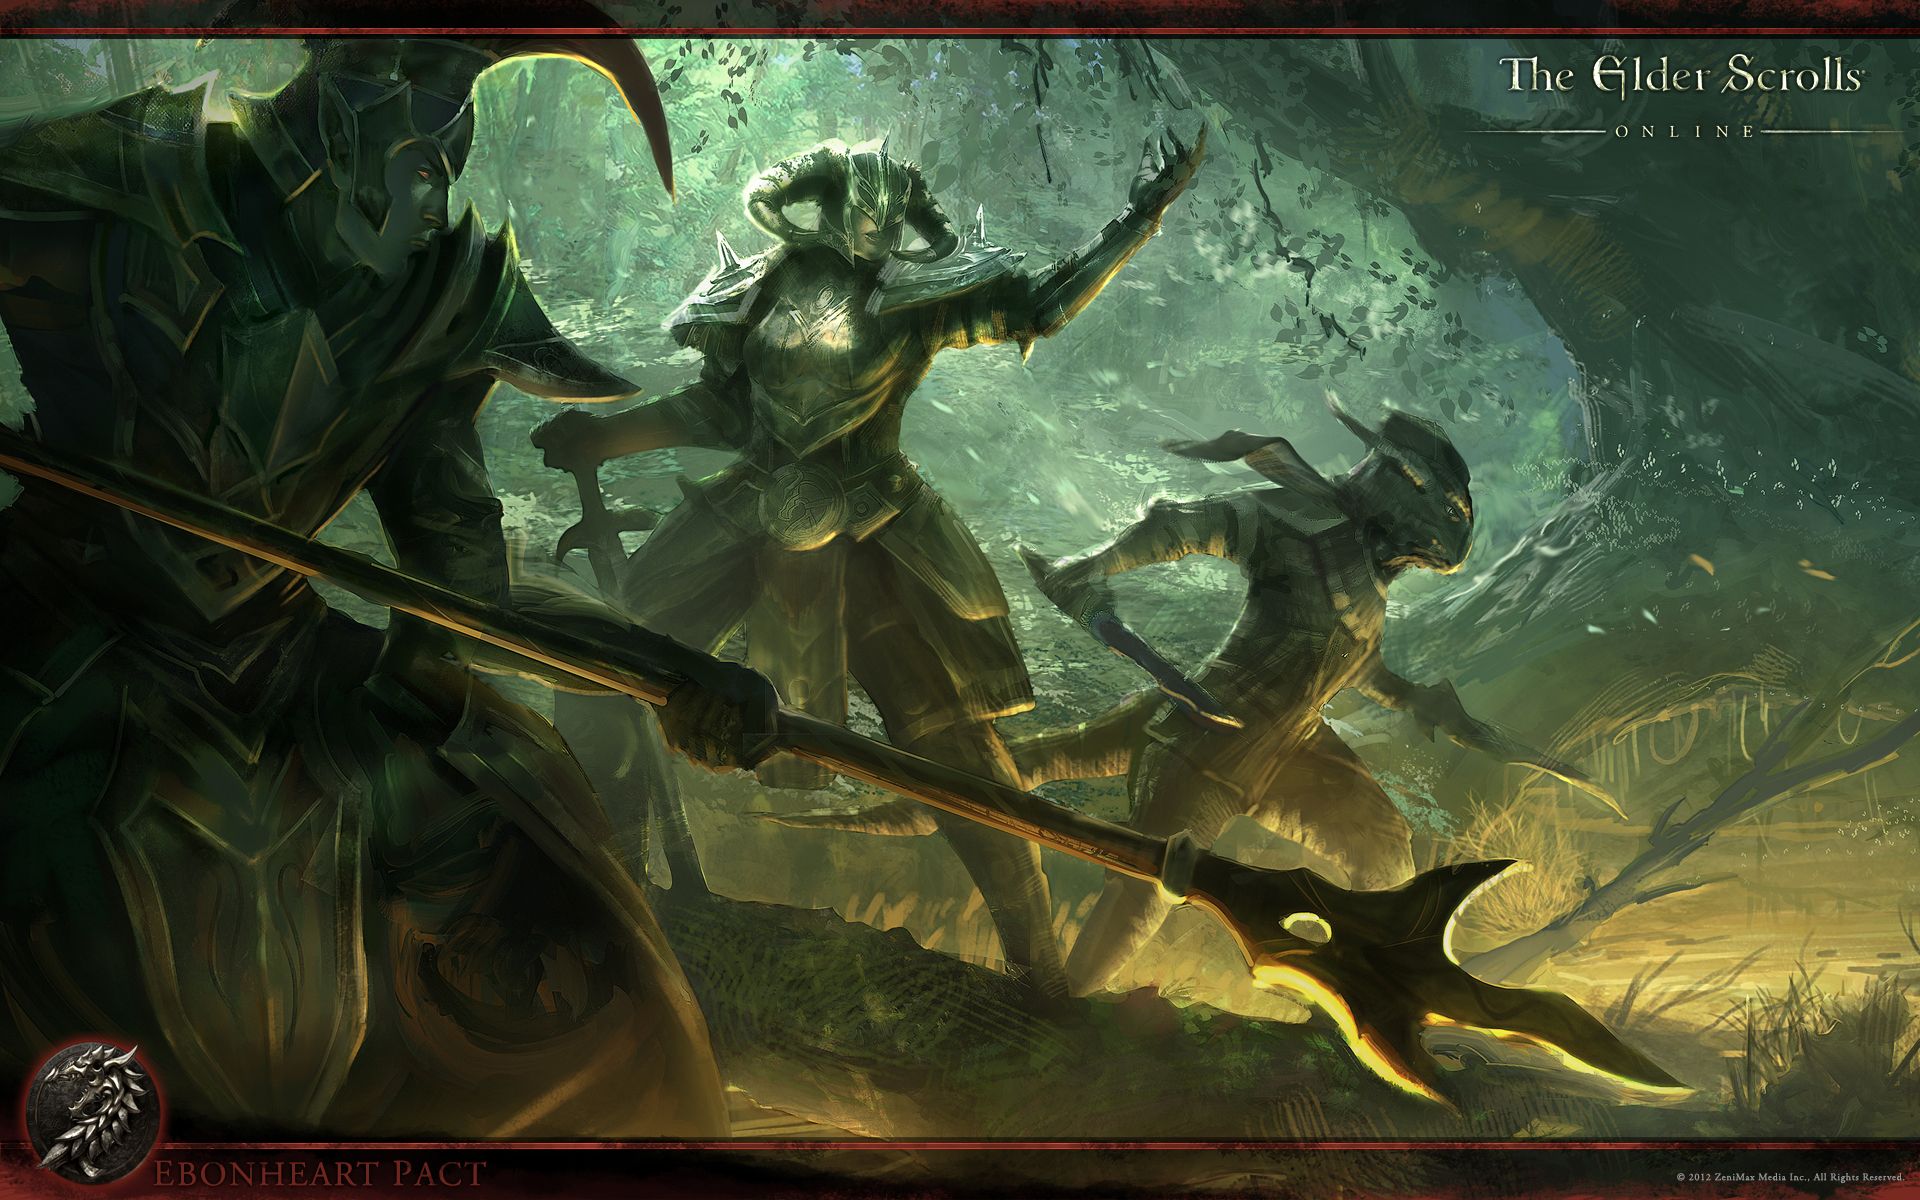 Free download The Elder Scrolls Online Wallpaper Concept Art